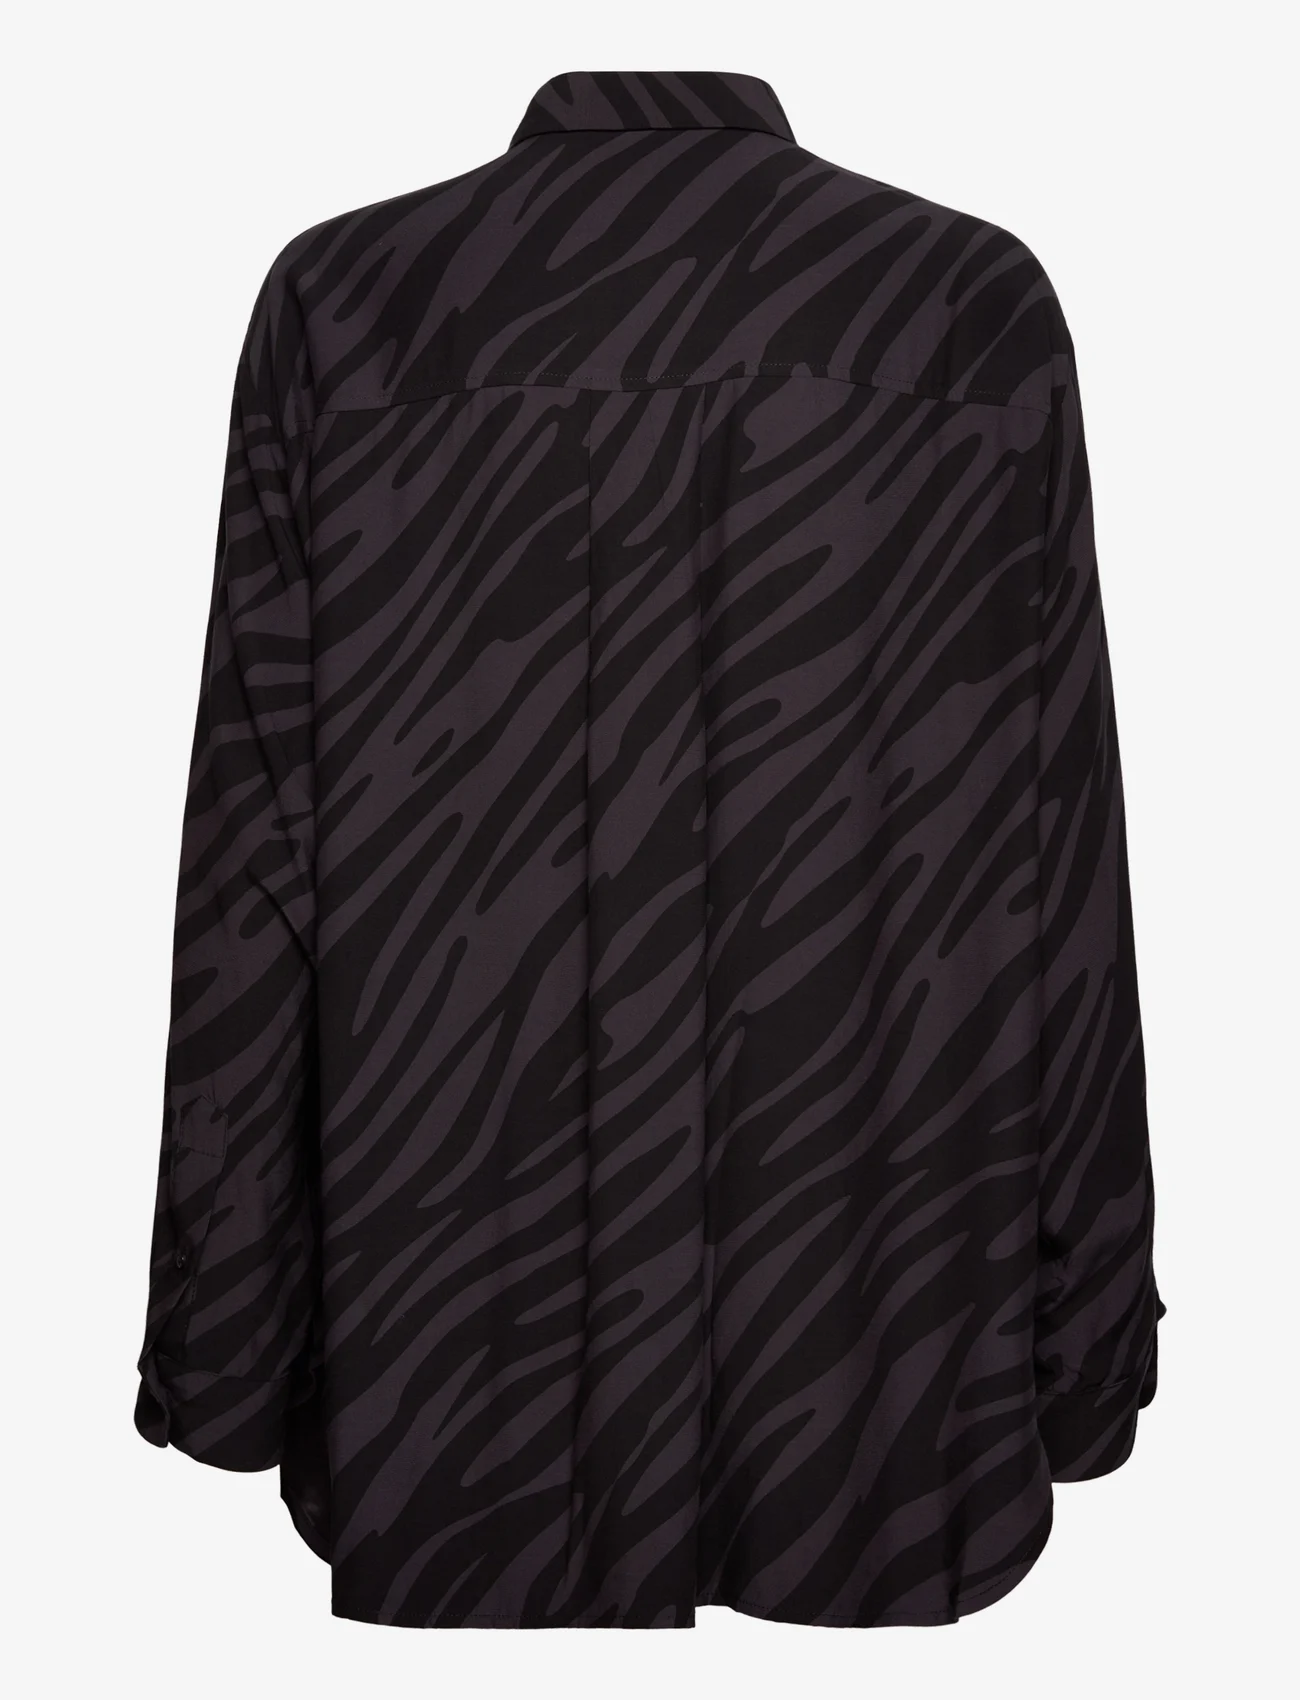 Samsøe Samsøe - Alfrida shirt 14201 - langärmlige hemden - tiger grey - 1